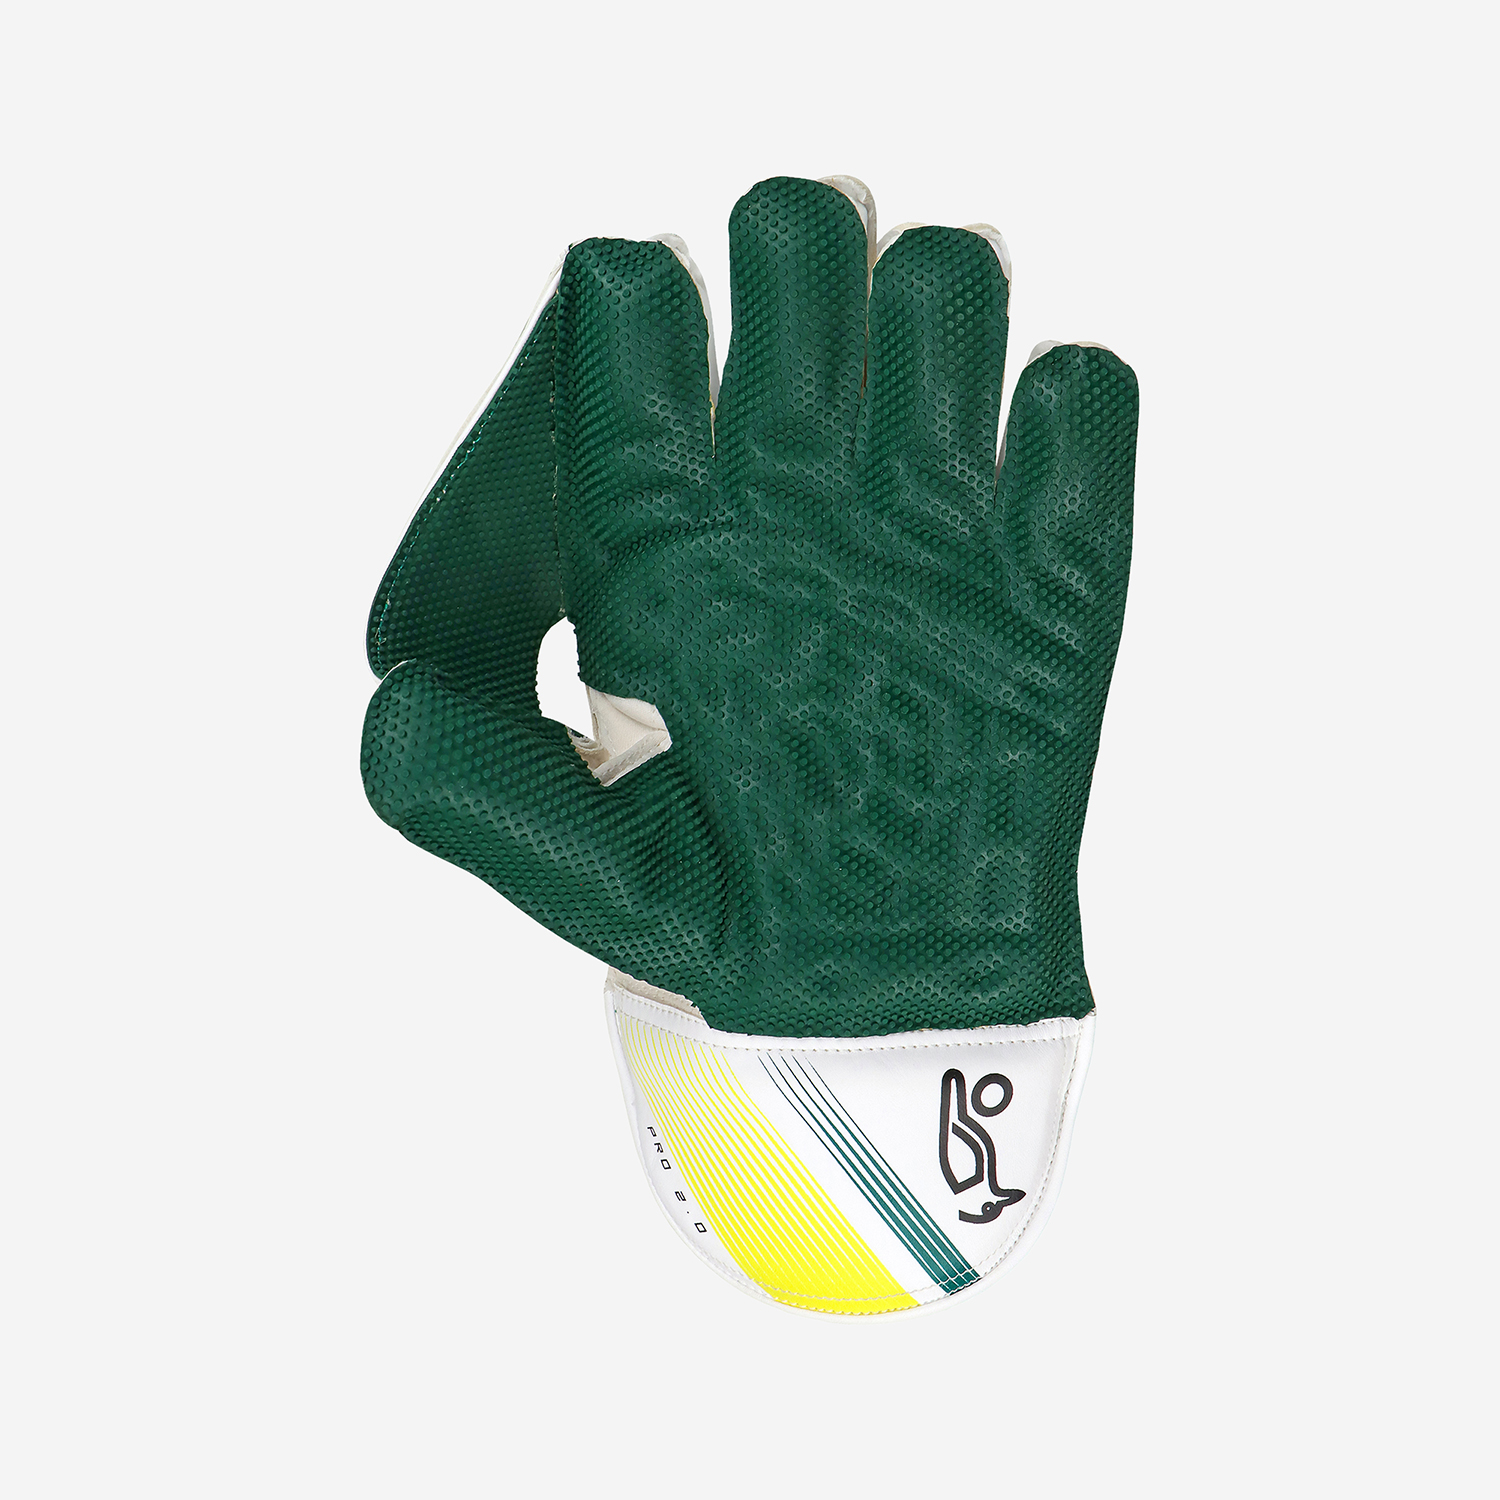 Pro 2.0 Wicket Keeping Gloves